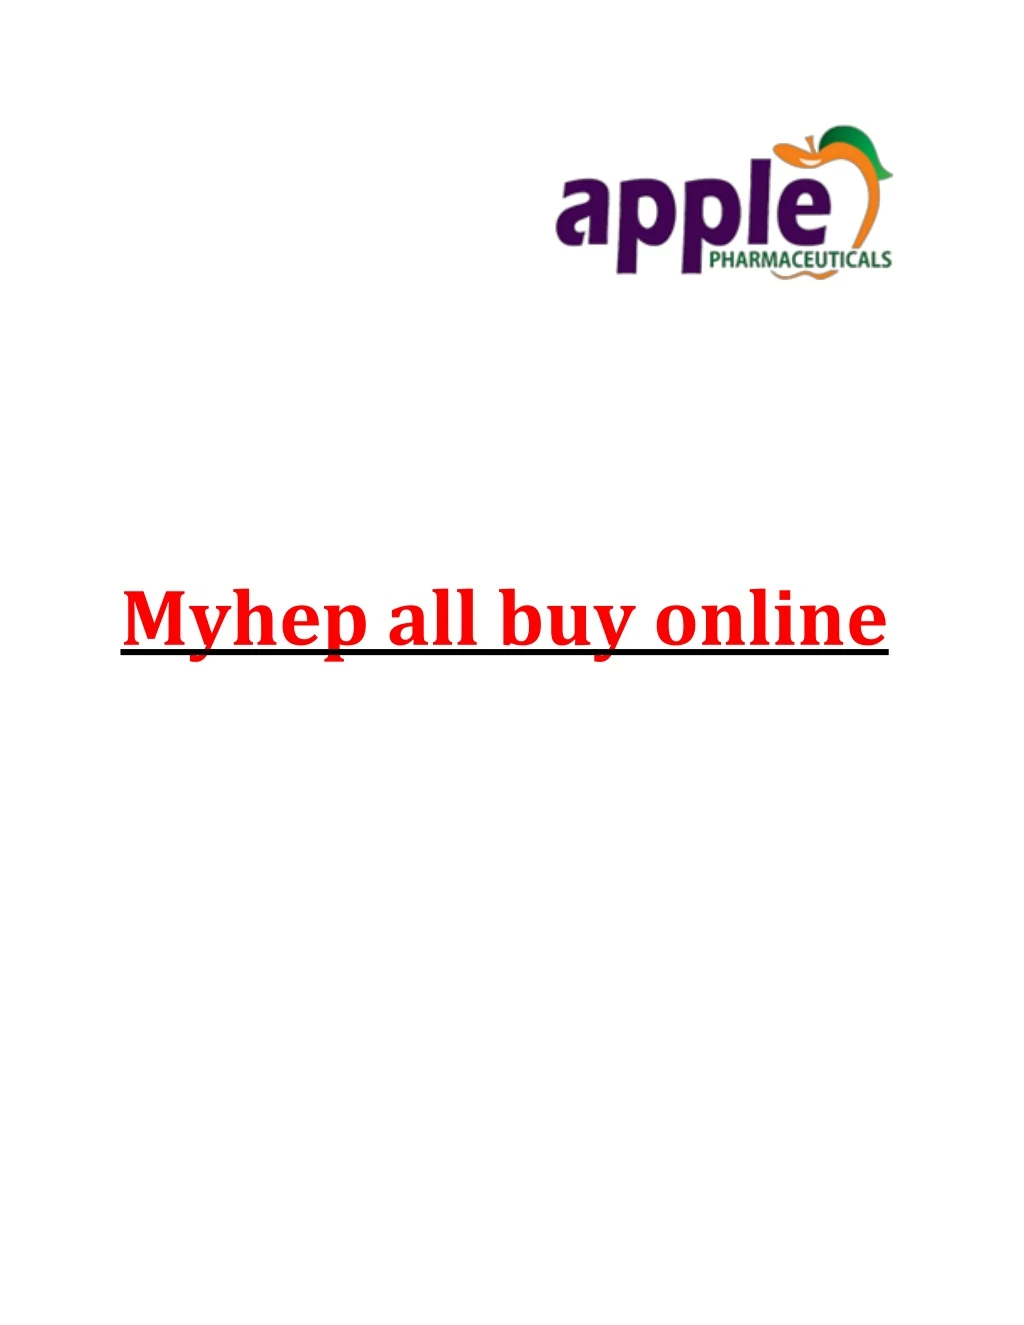 myhep all buy online